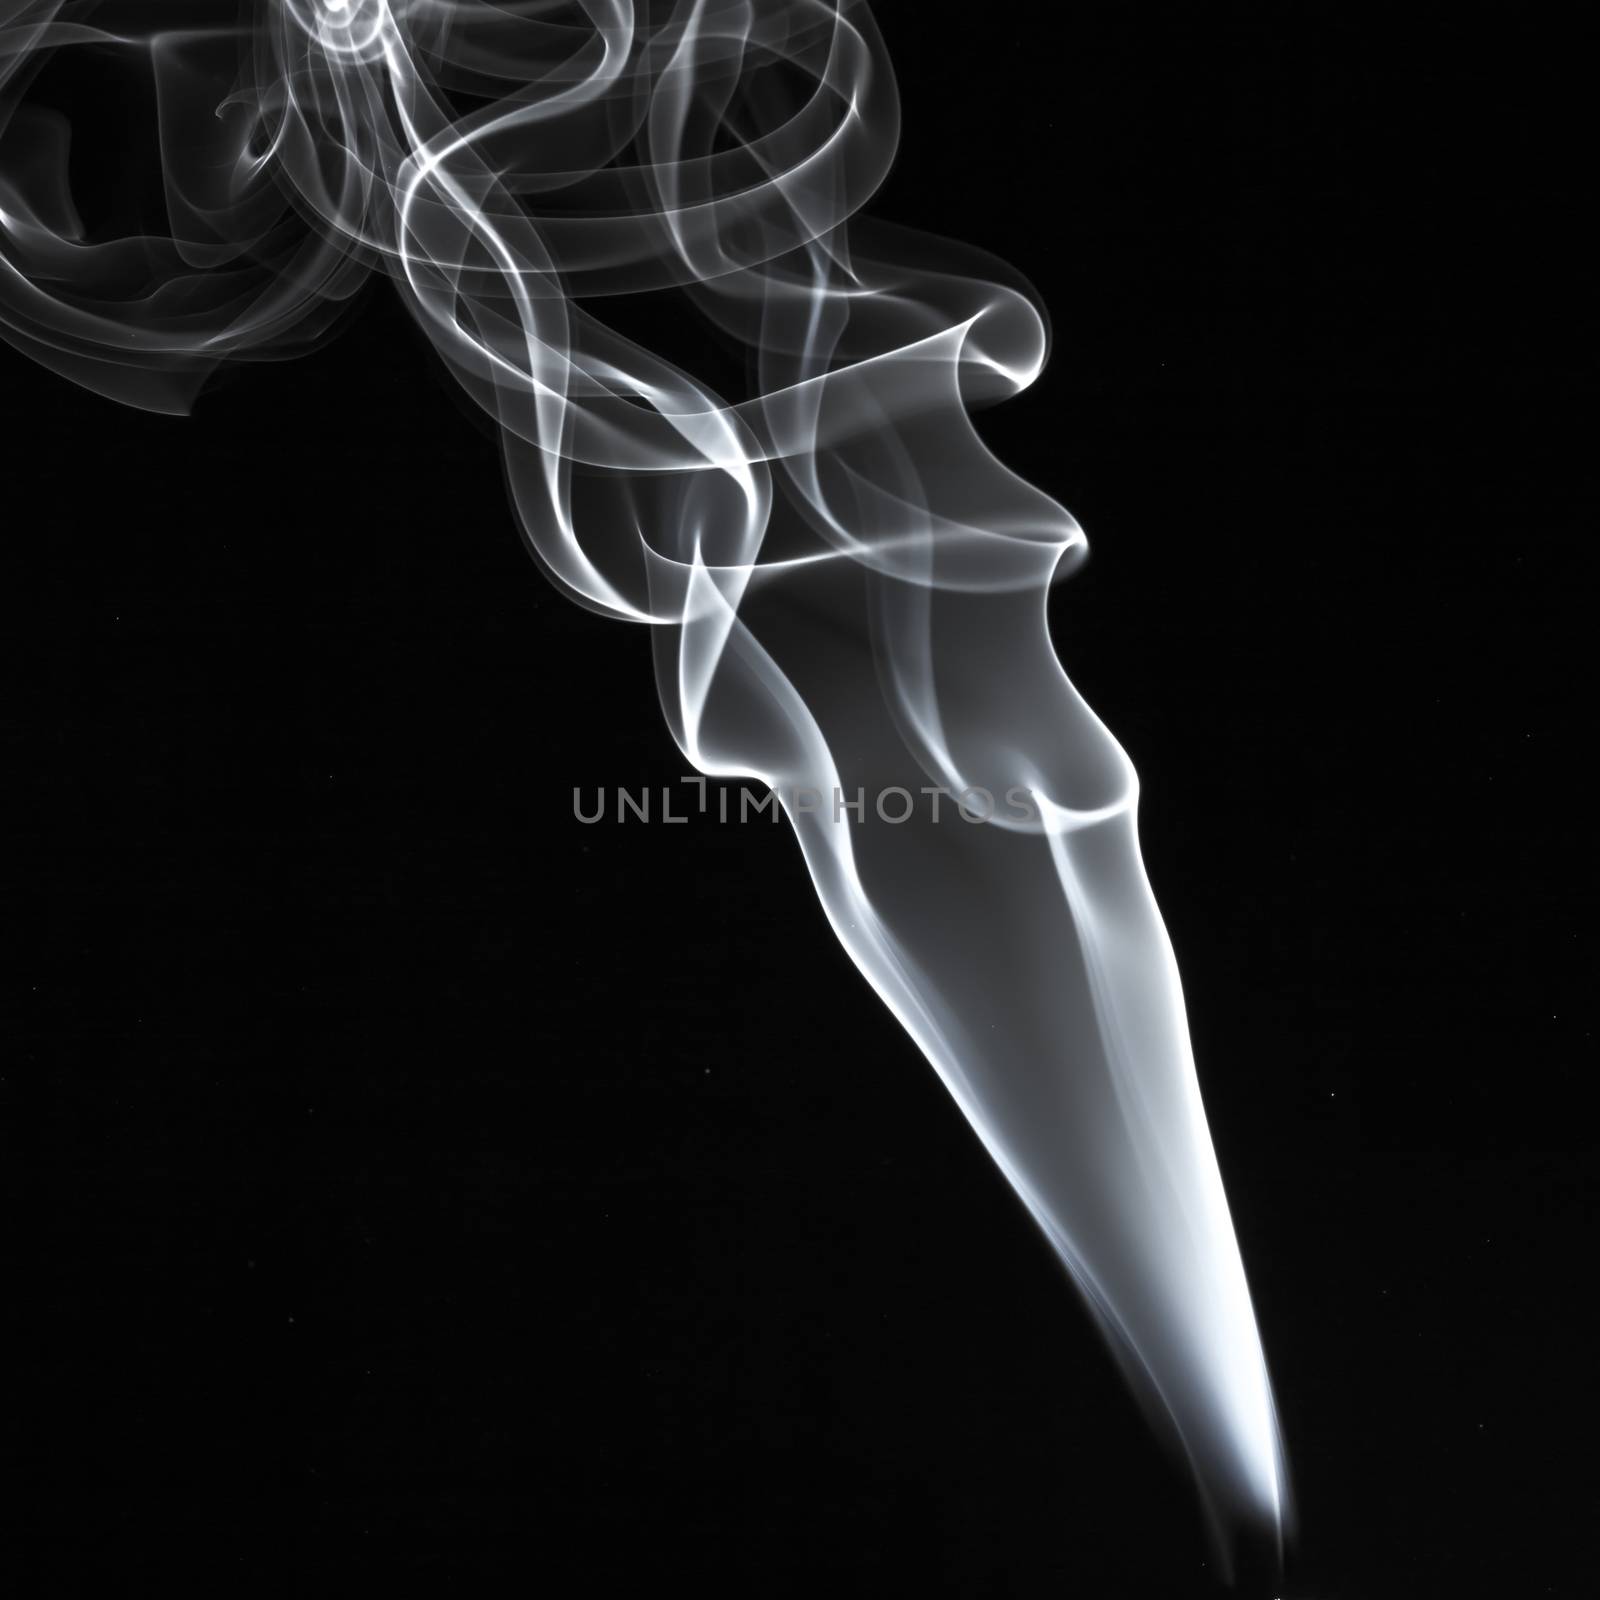 Abstract white smoke swirls pattern over the black background by petrsvoboda91